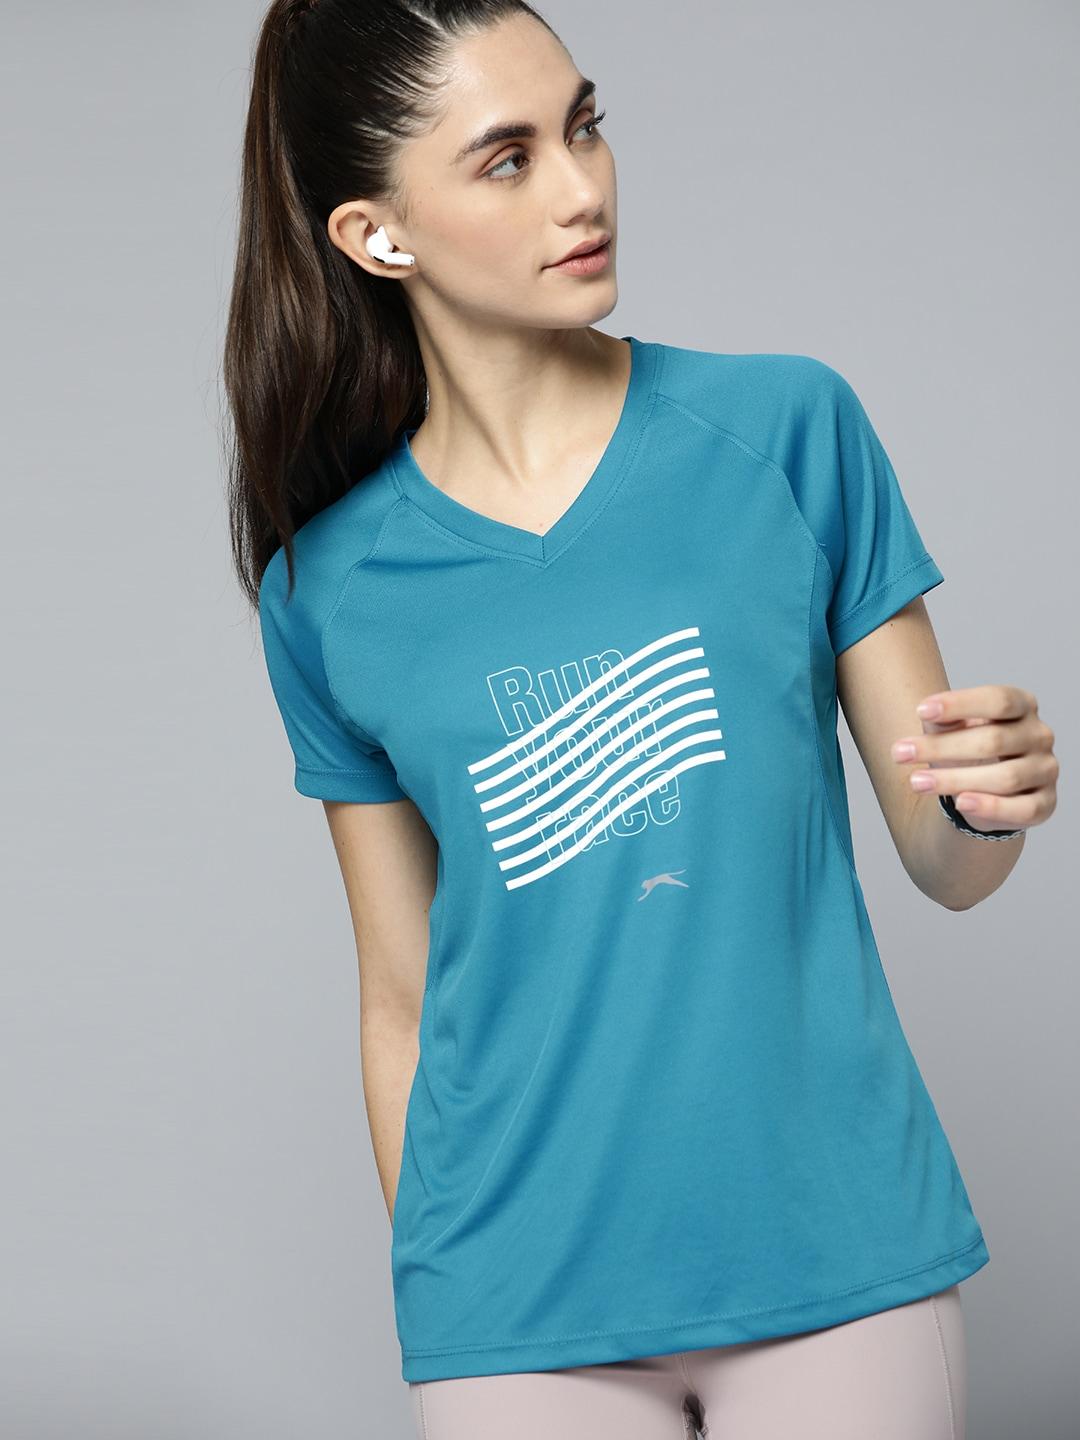 Slazenger Women Teal Blue & White Striped Running T-shirt with Reflective Detail